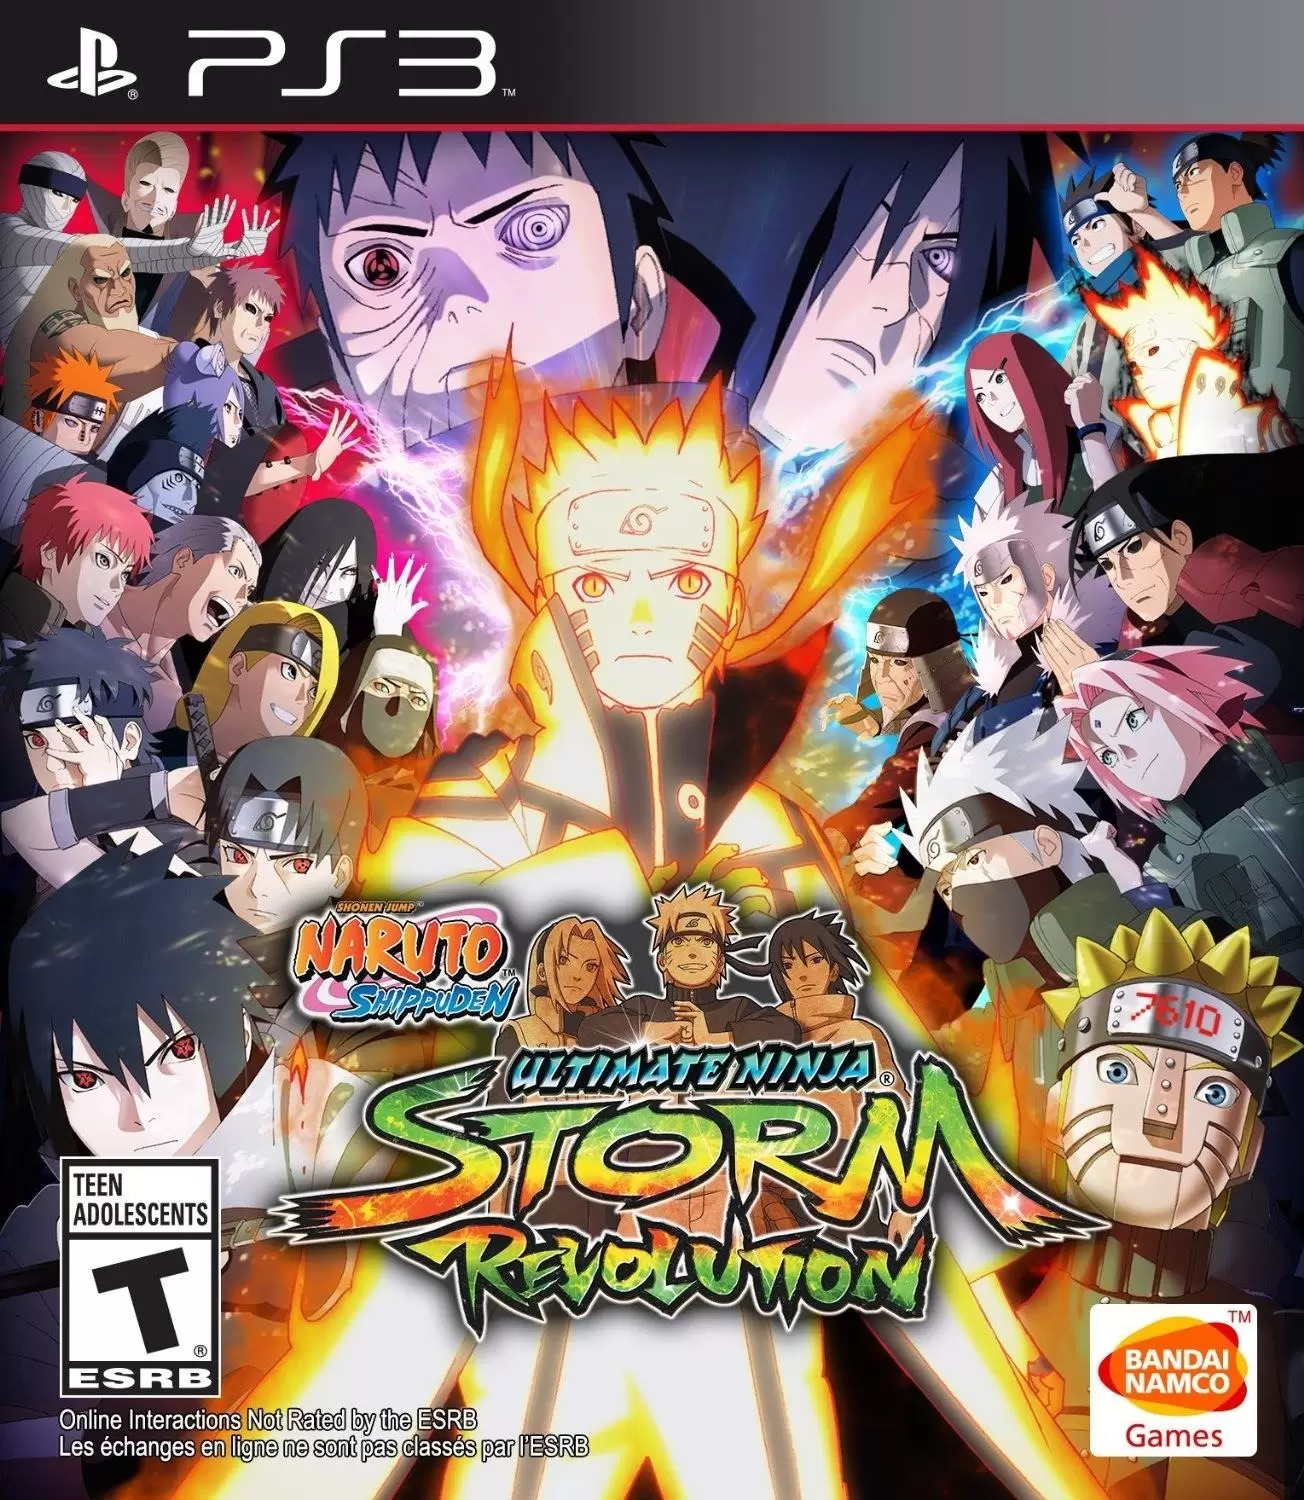 PS3 Games - Naruto Shippuden: Ultimate Ninja Storm Revolution